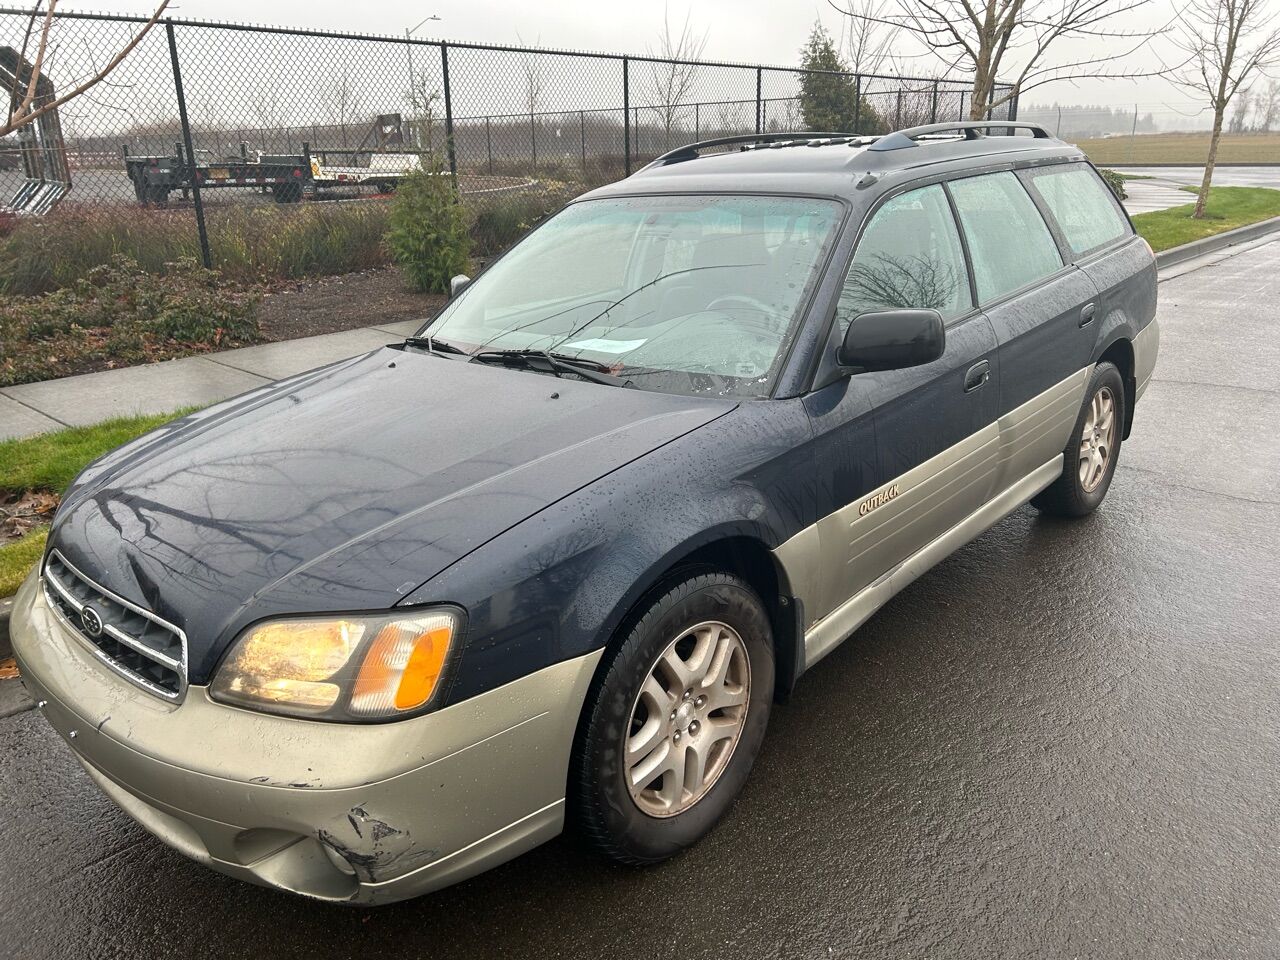 2000 Subaru Outback For Sale In Salem, OR - Carsforsale.com®